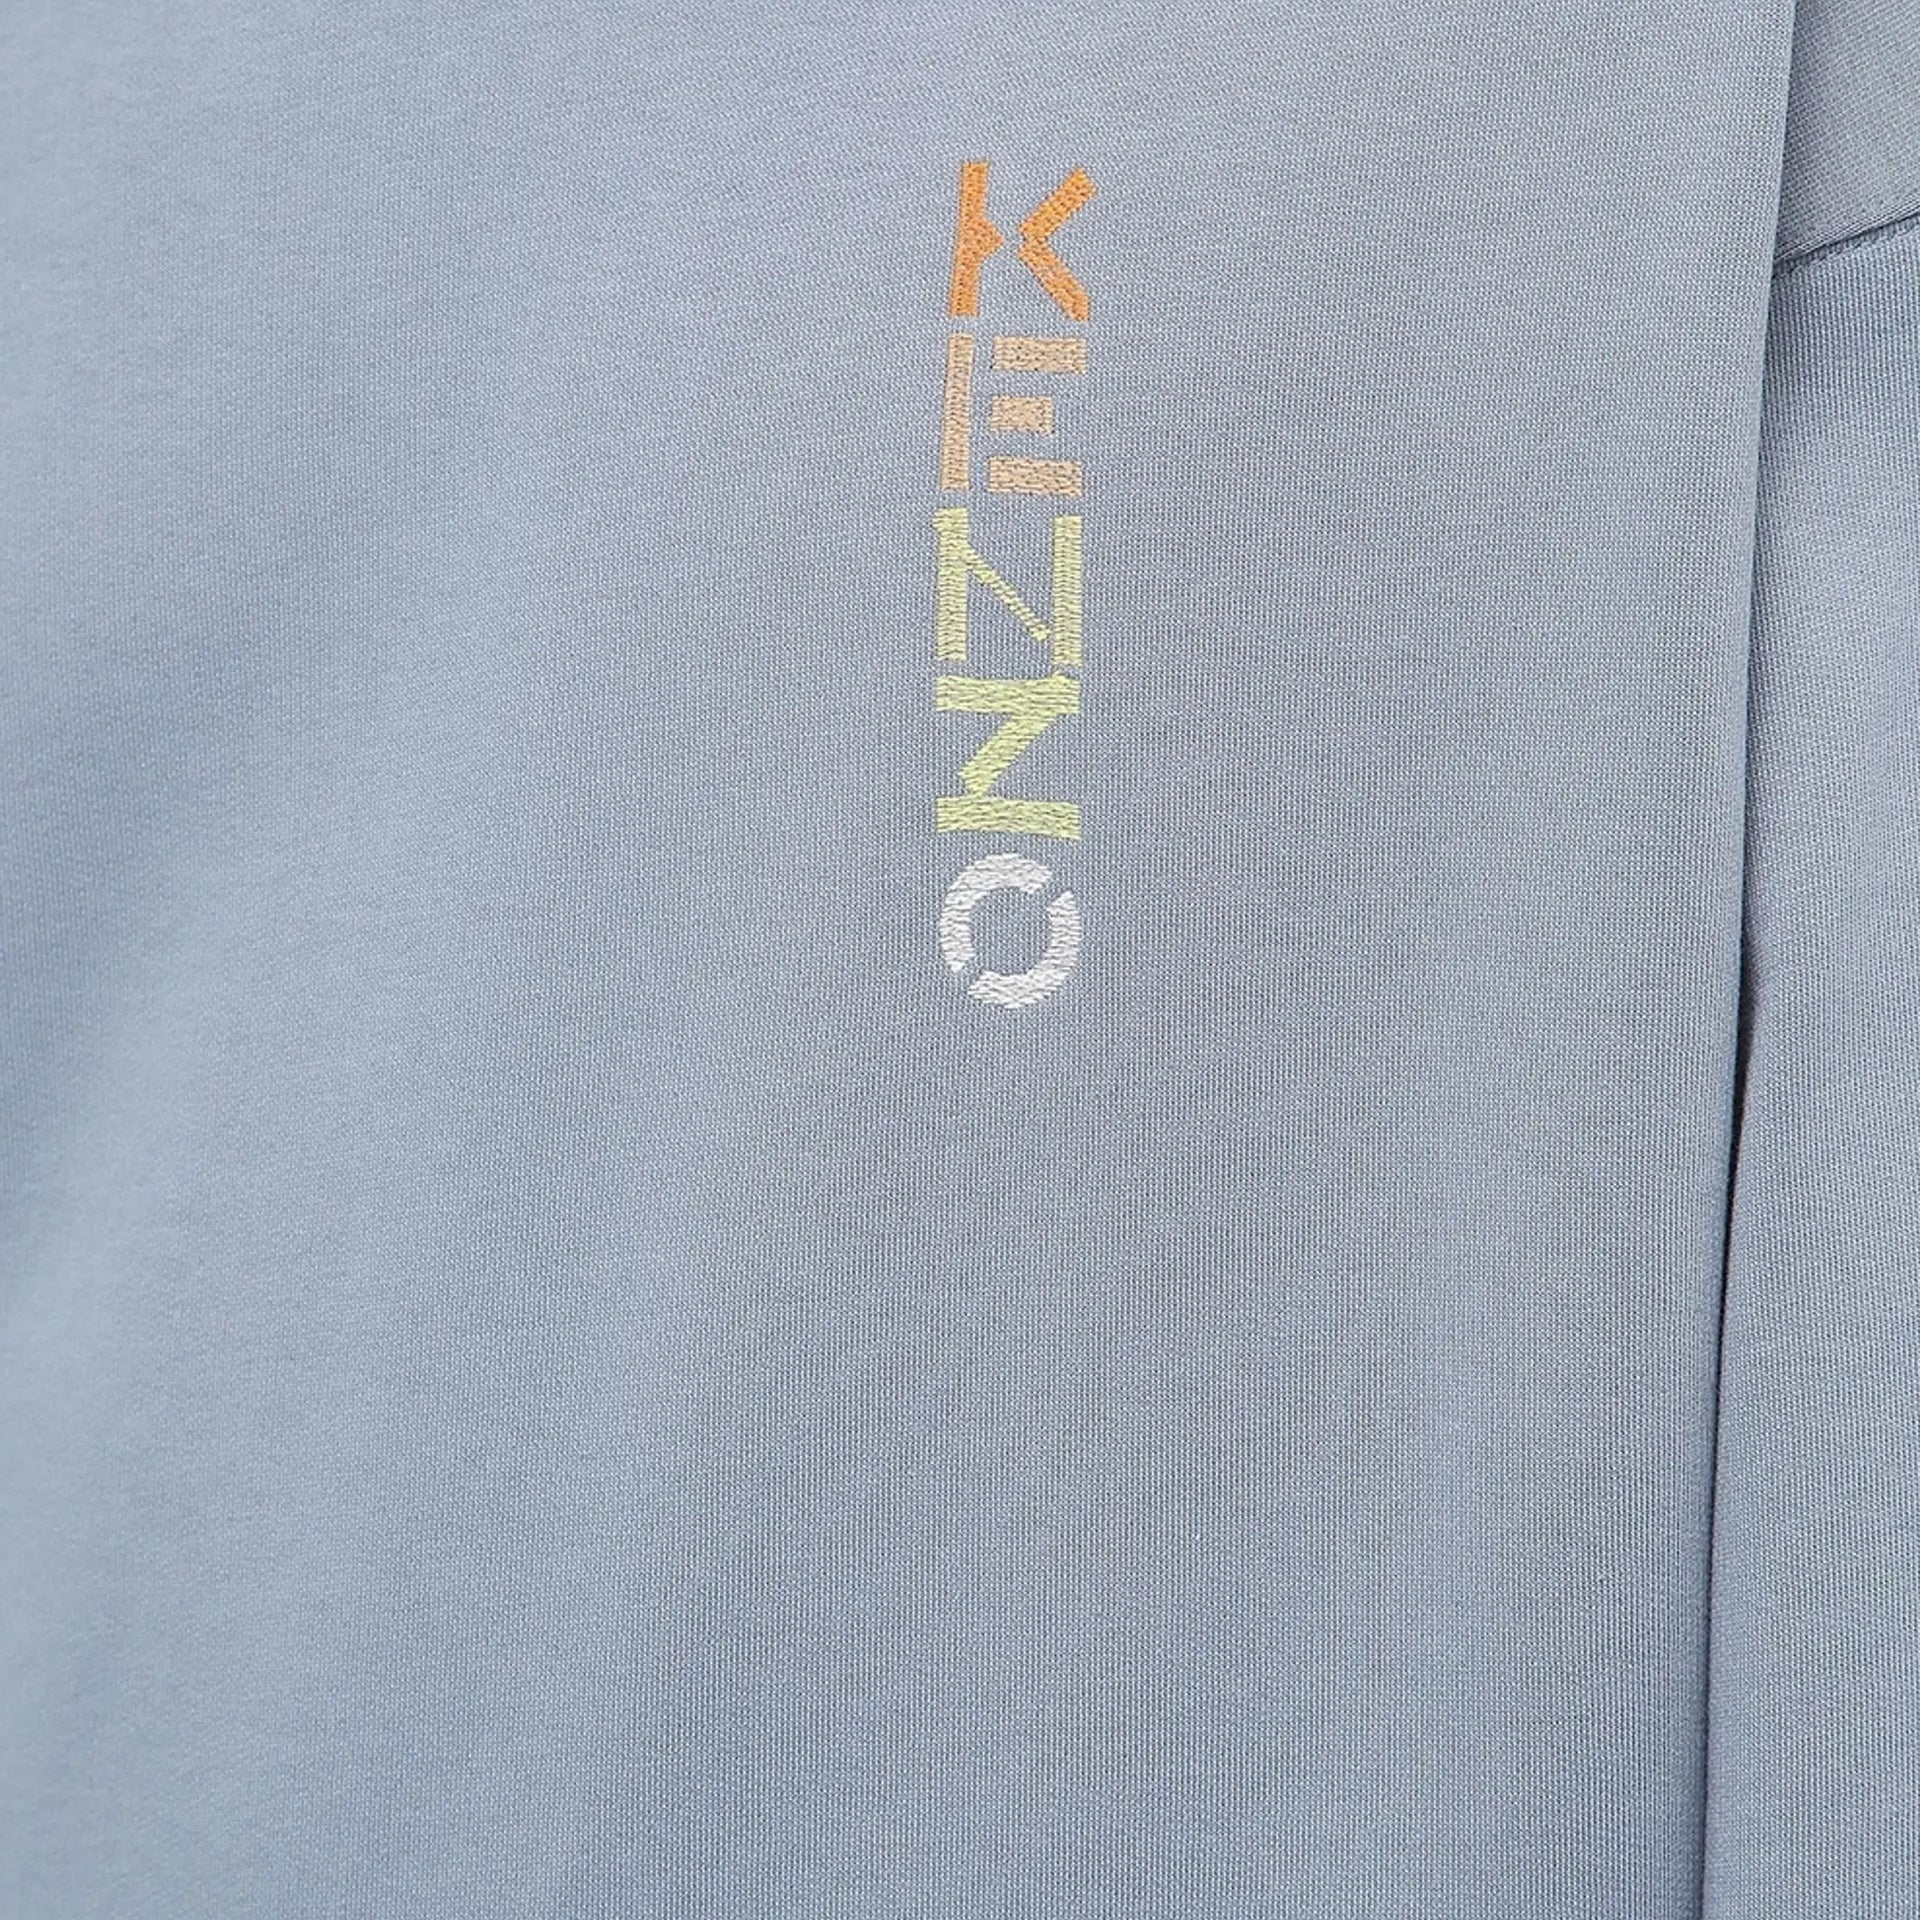 KENZO-OUTLET-SALE-Kenzo-Oversize-Logo-Sweatshirt-Shirts-ARCHIVE-COLLECTION-3.jpg